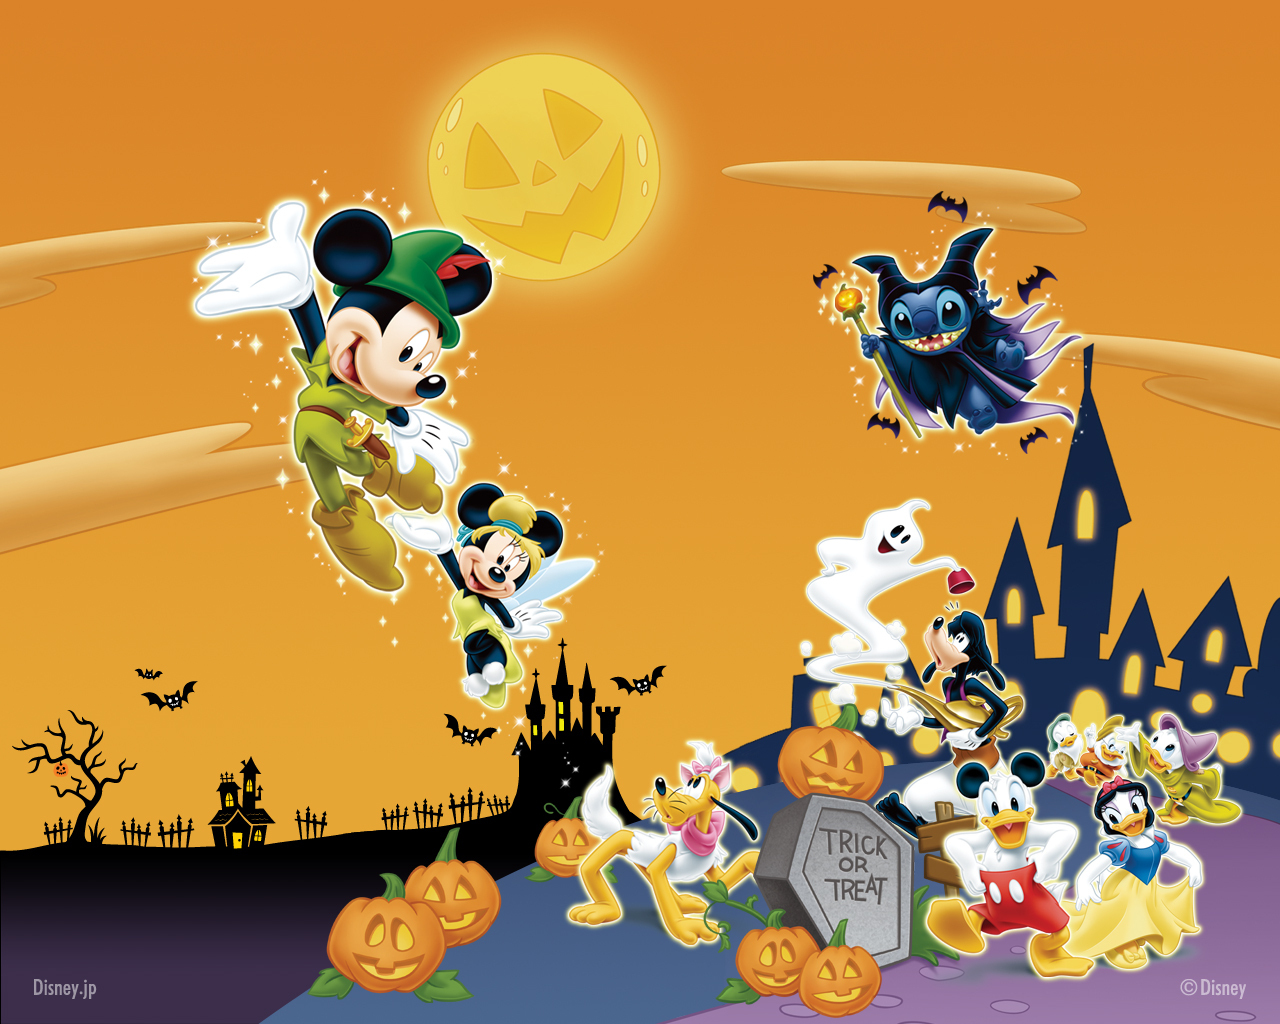 Halloween Disney Cartoon Characters Image Amp Pictures Becuo